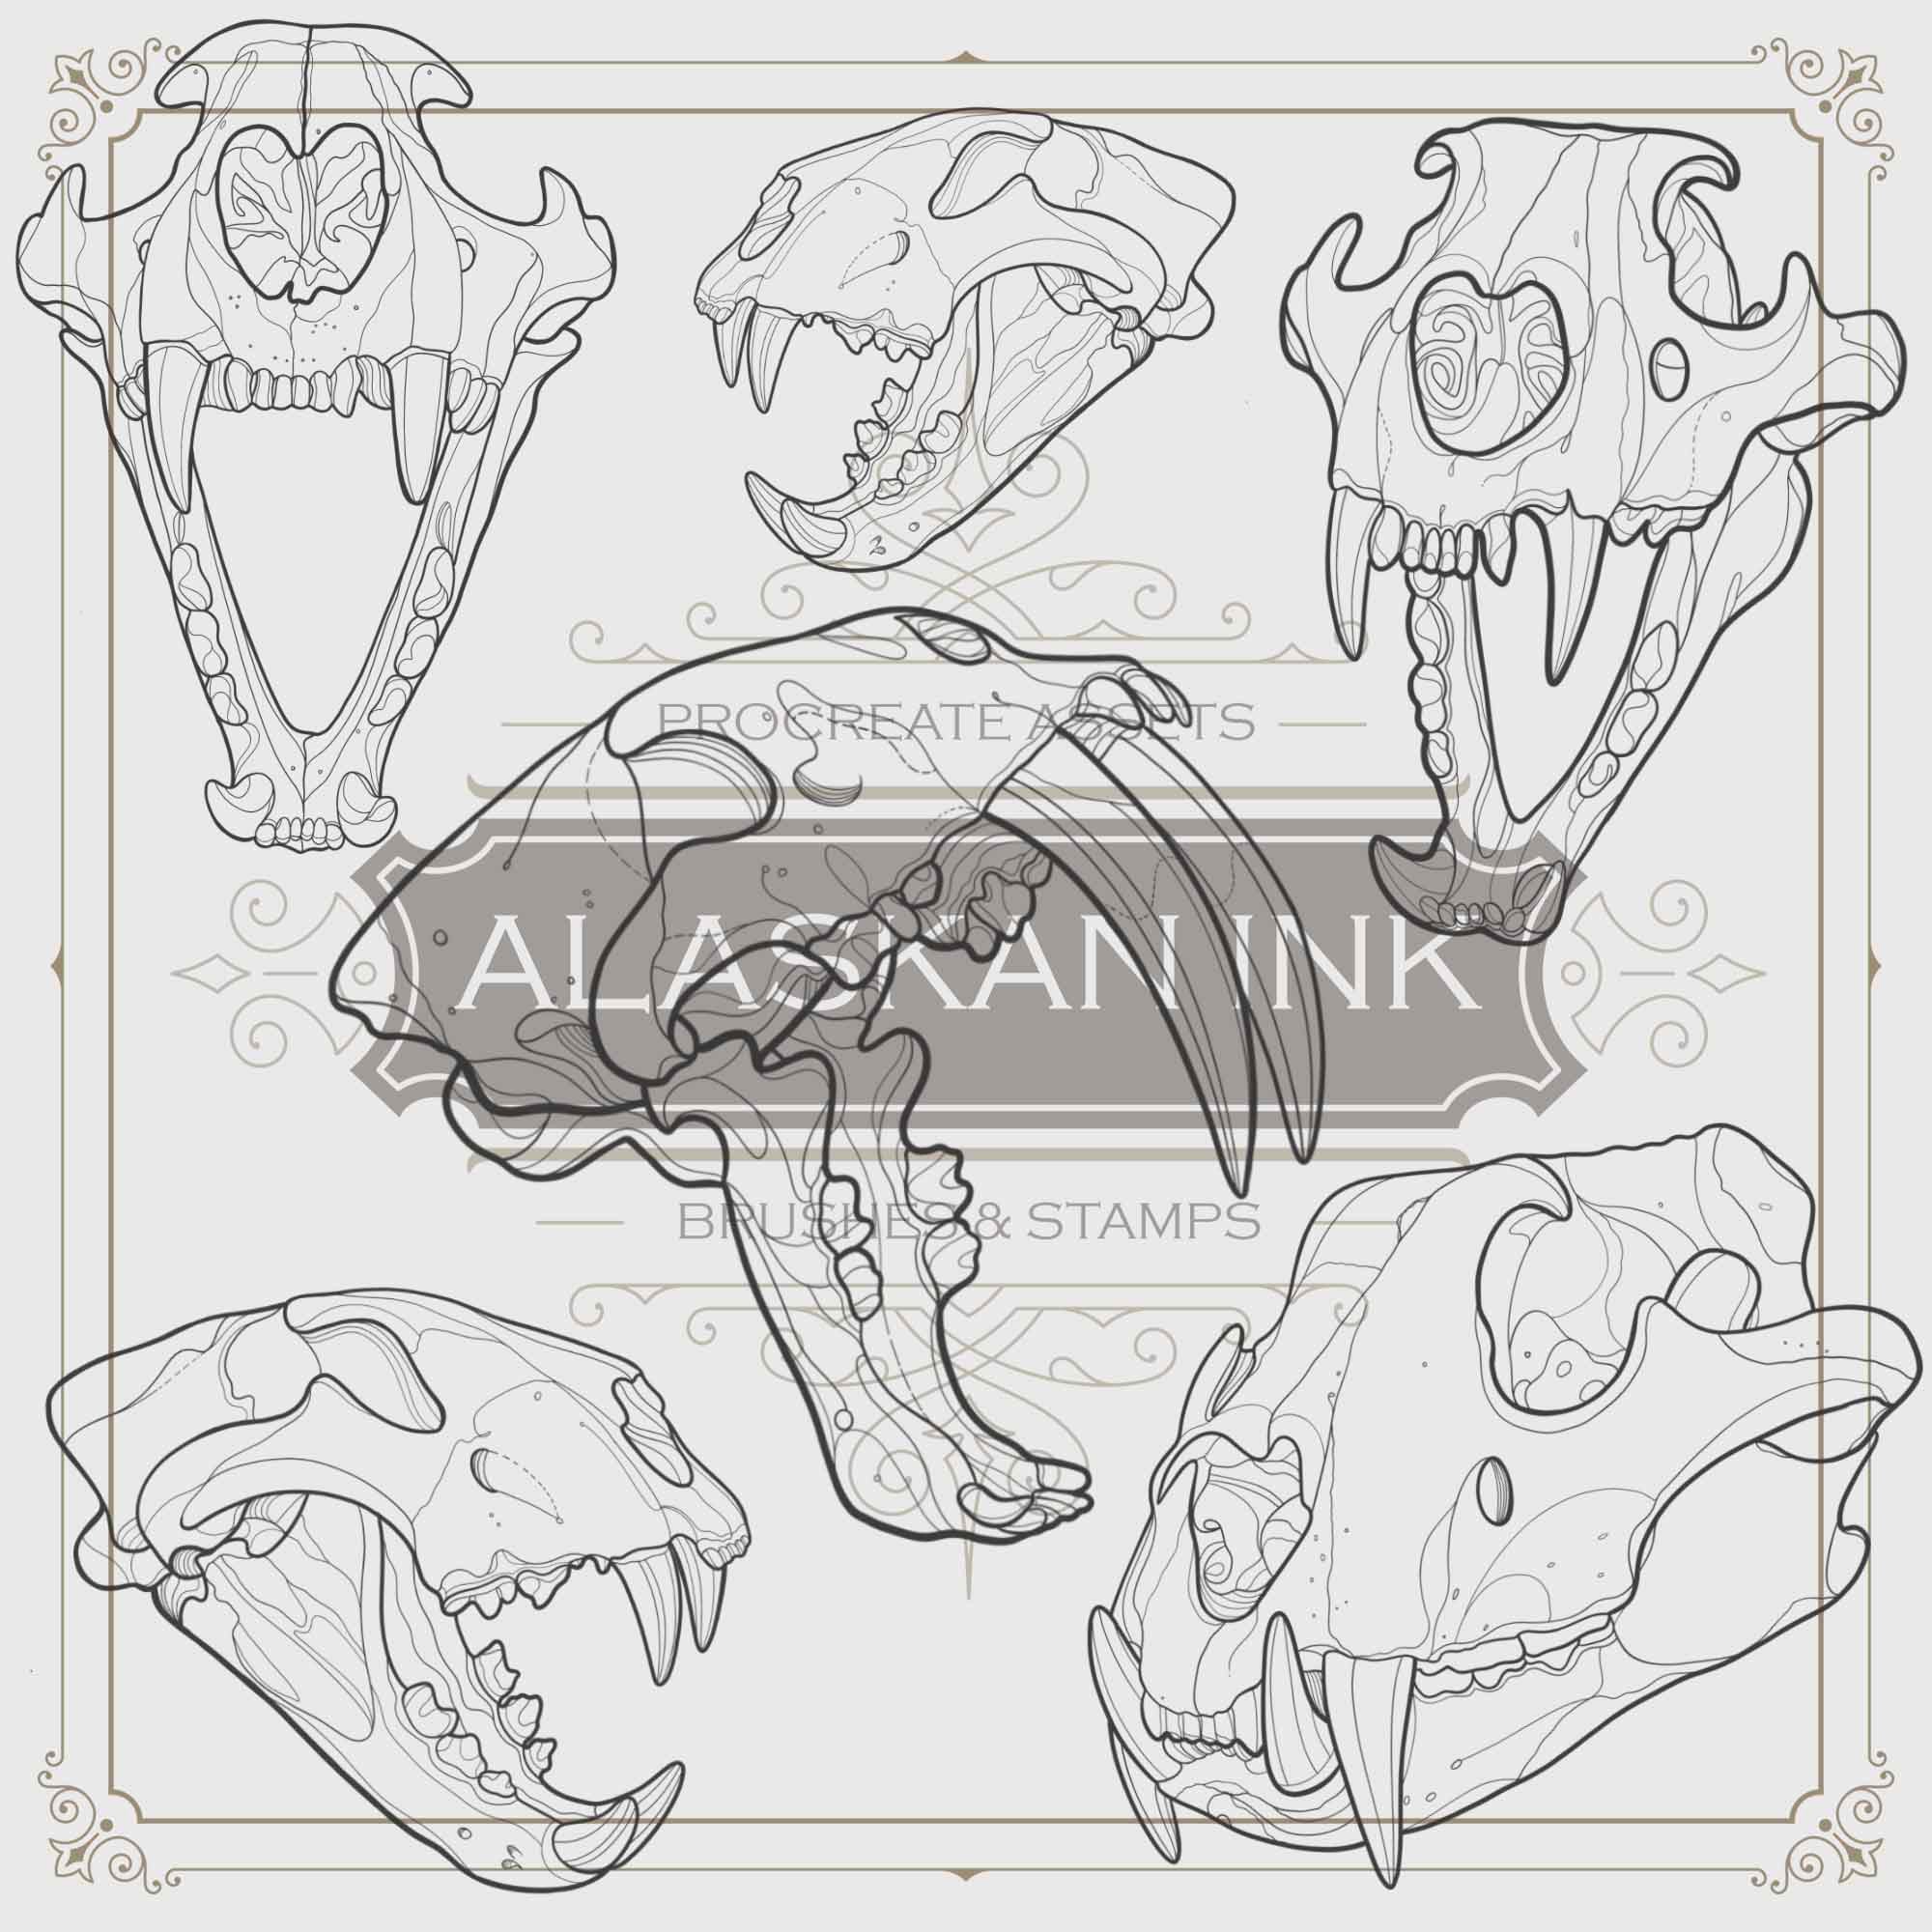 Animal skull with horns isolated on white background. Skull tattoo design  Stock Vector Image & Art - Alamy